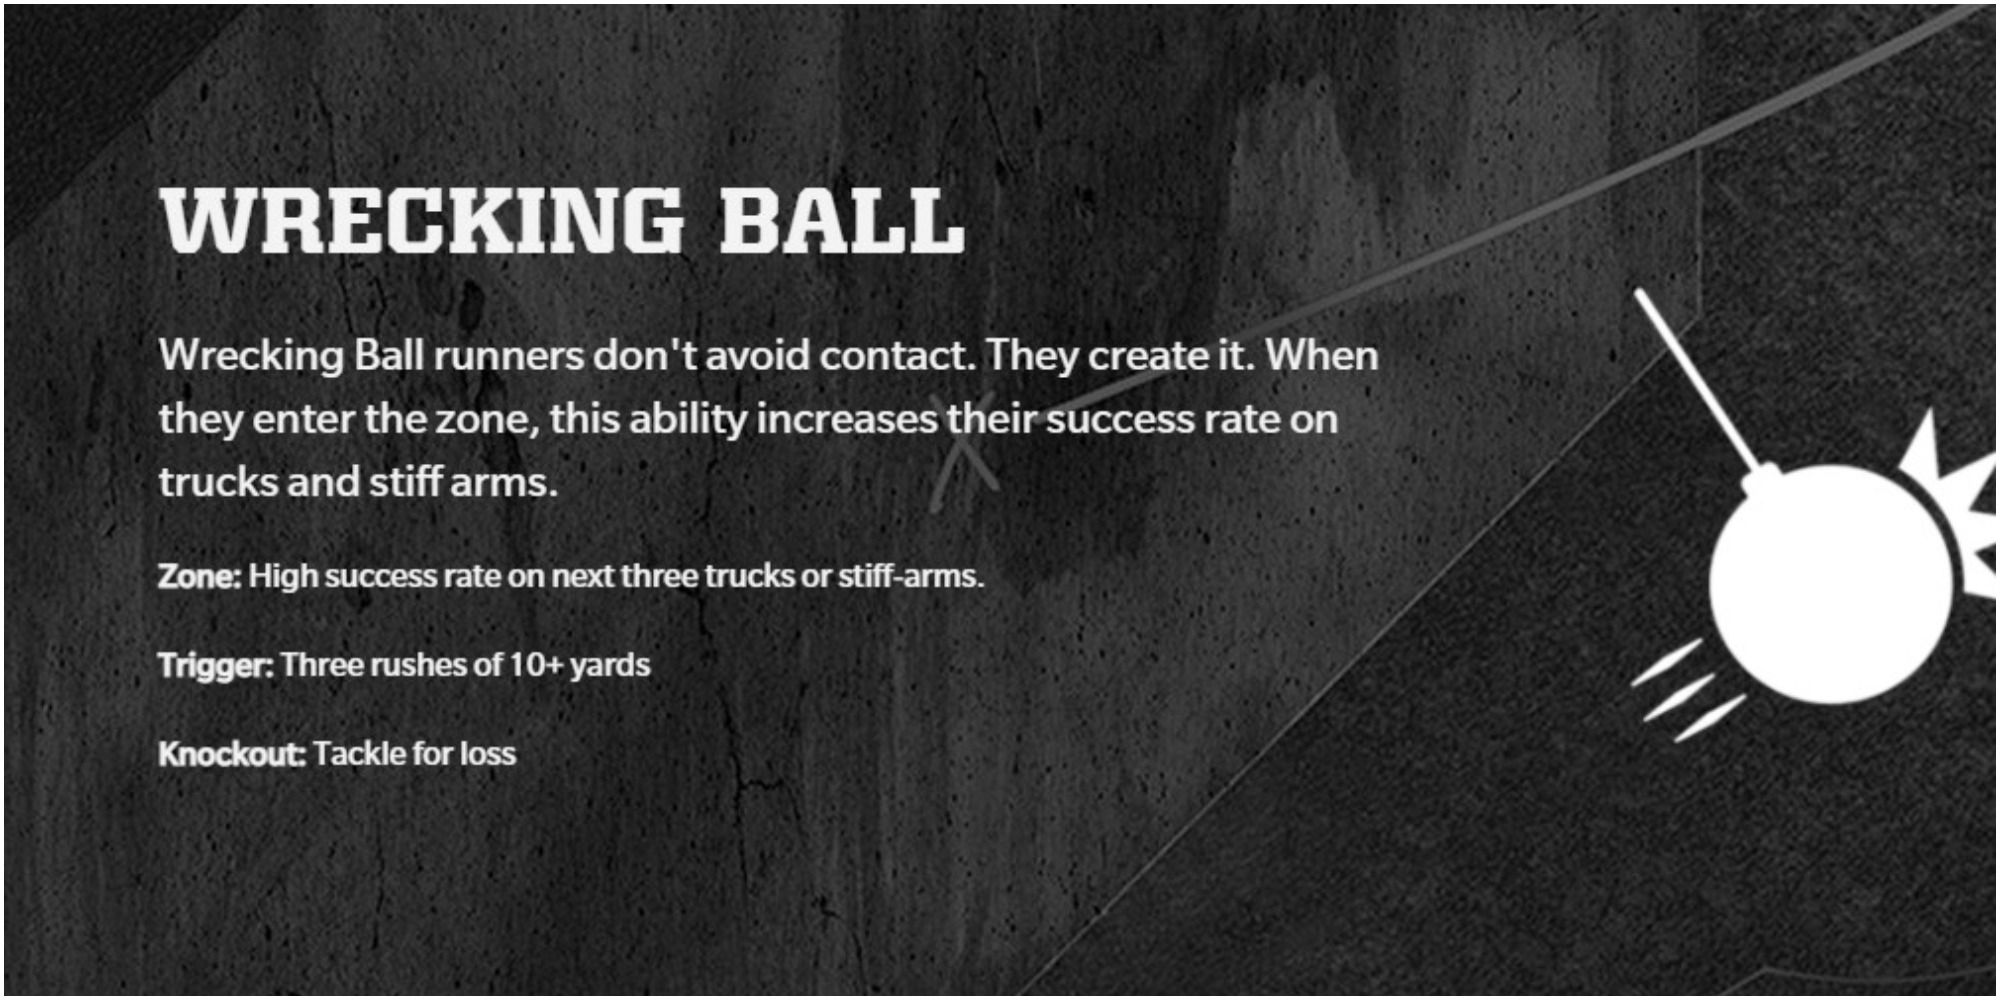 Madden NFL 22 Wrecking Ball Description On The Website